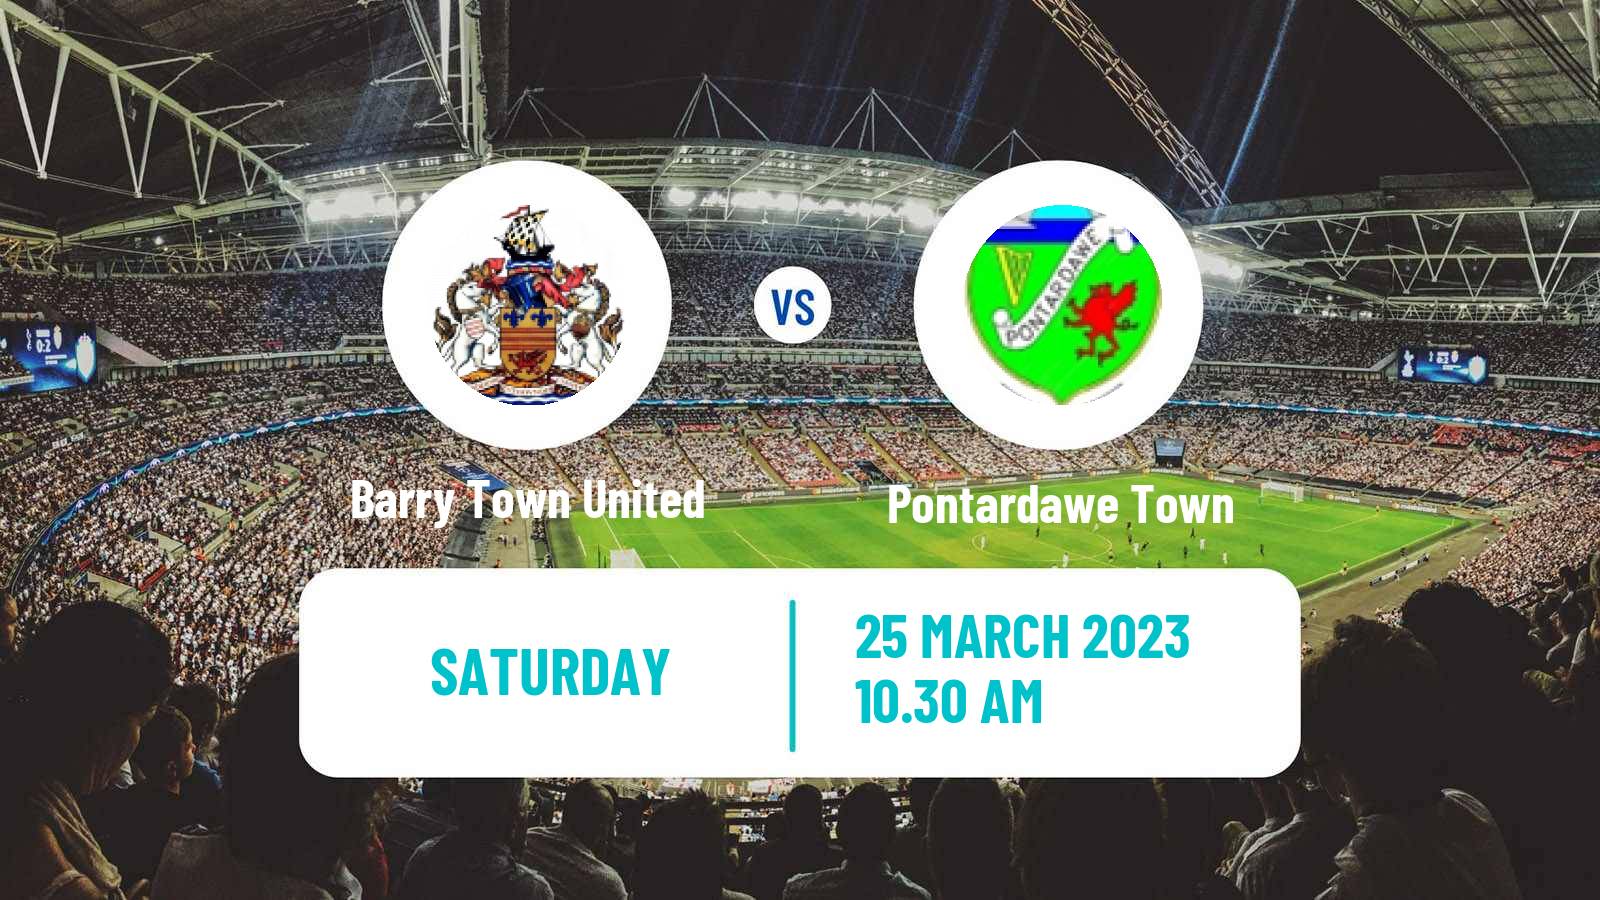 Soccer Welsh Cymru South Barry Town United - Pontardawe Town